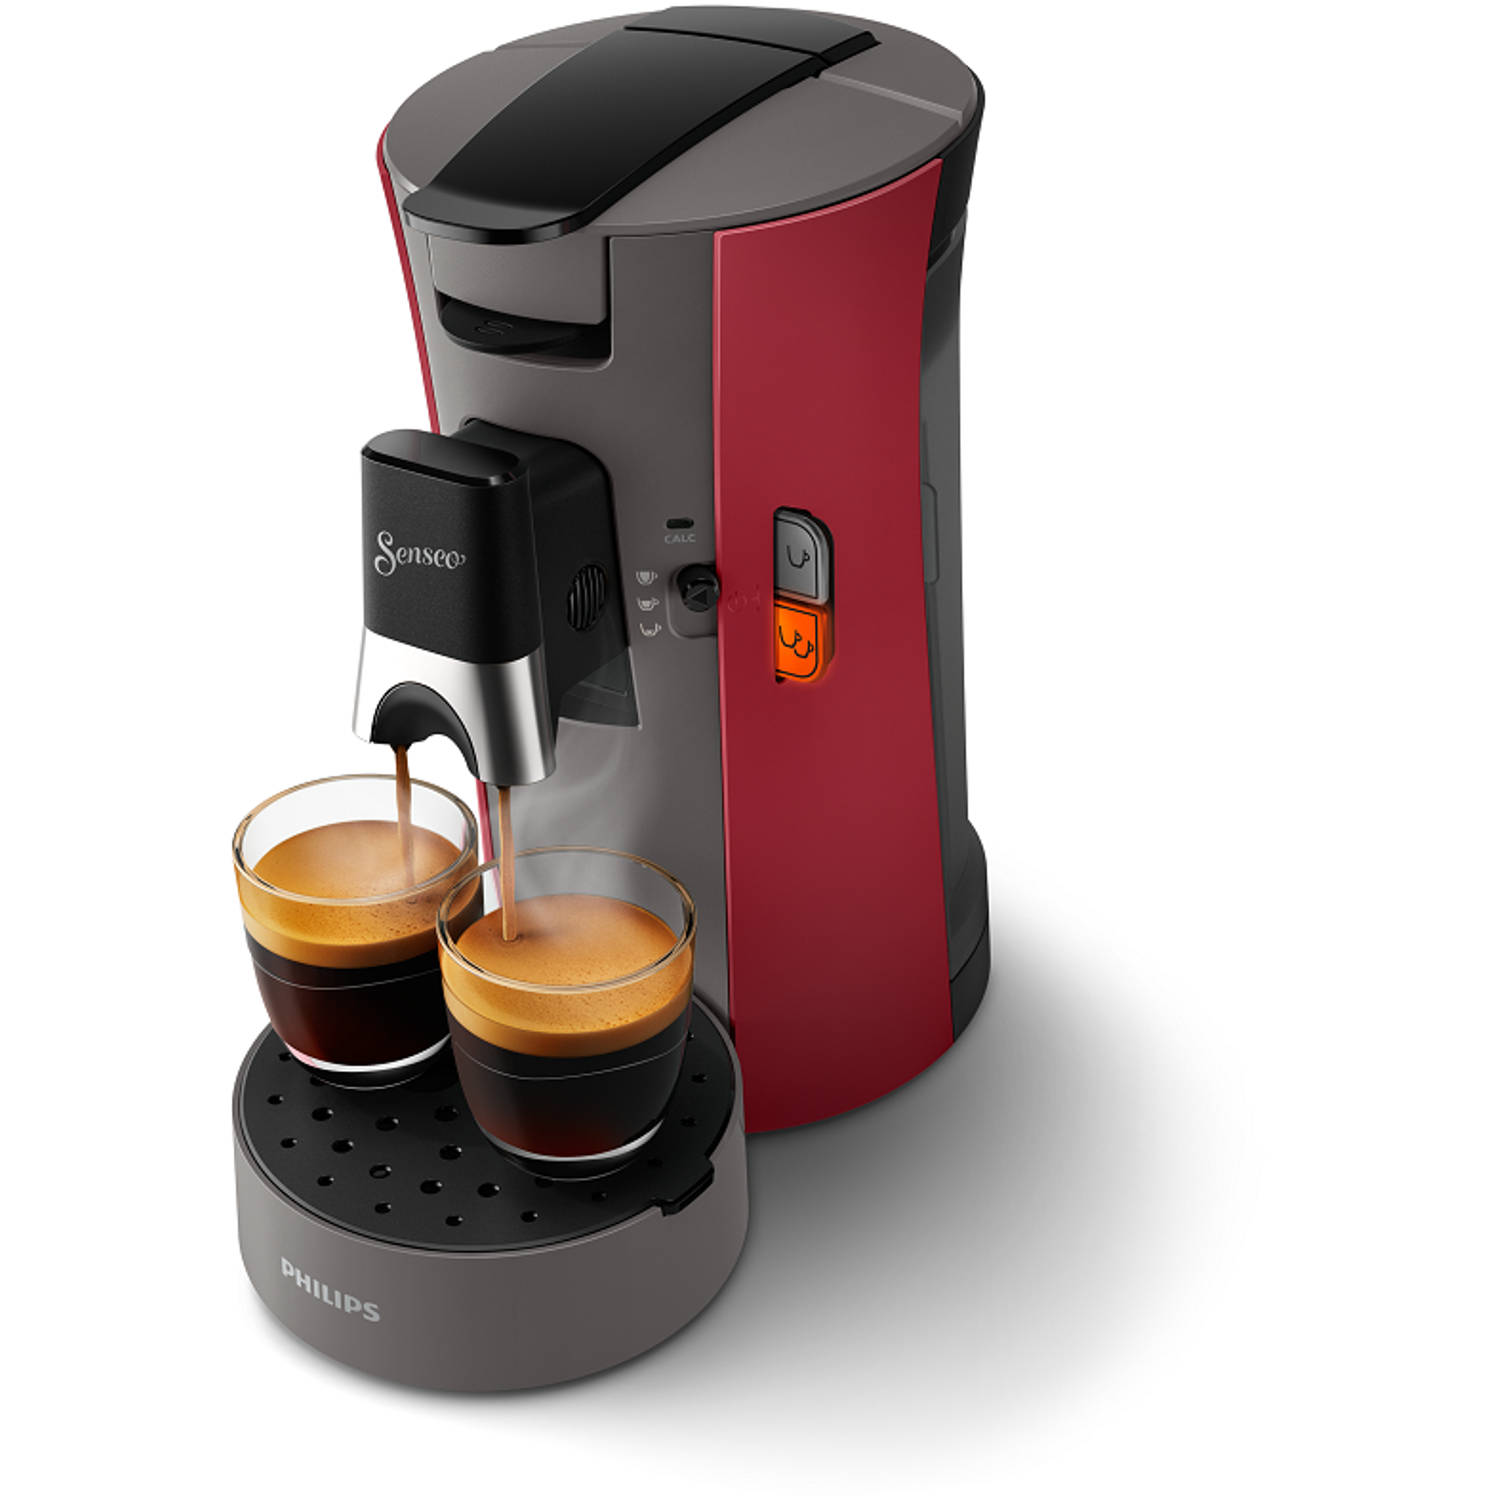 Waarnemen Claire Betsy Trotwood Philips SENSEO® Select koffiepadmachine CSA230/90 rood | Blokker